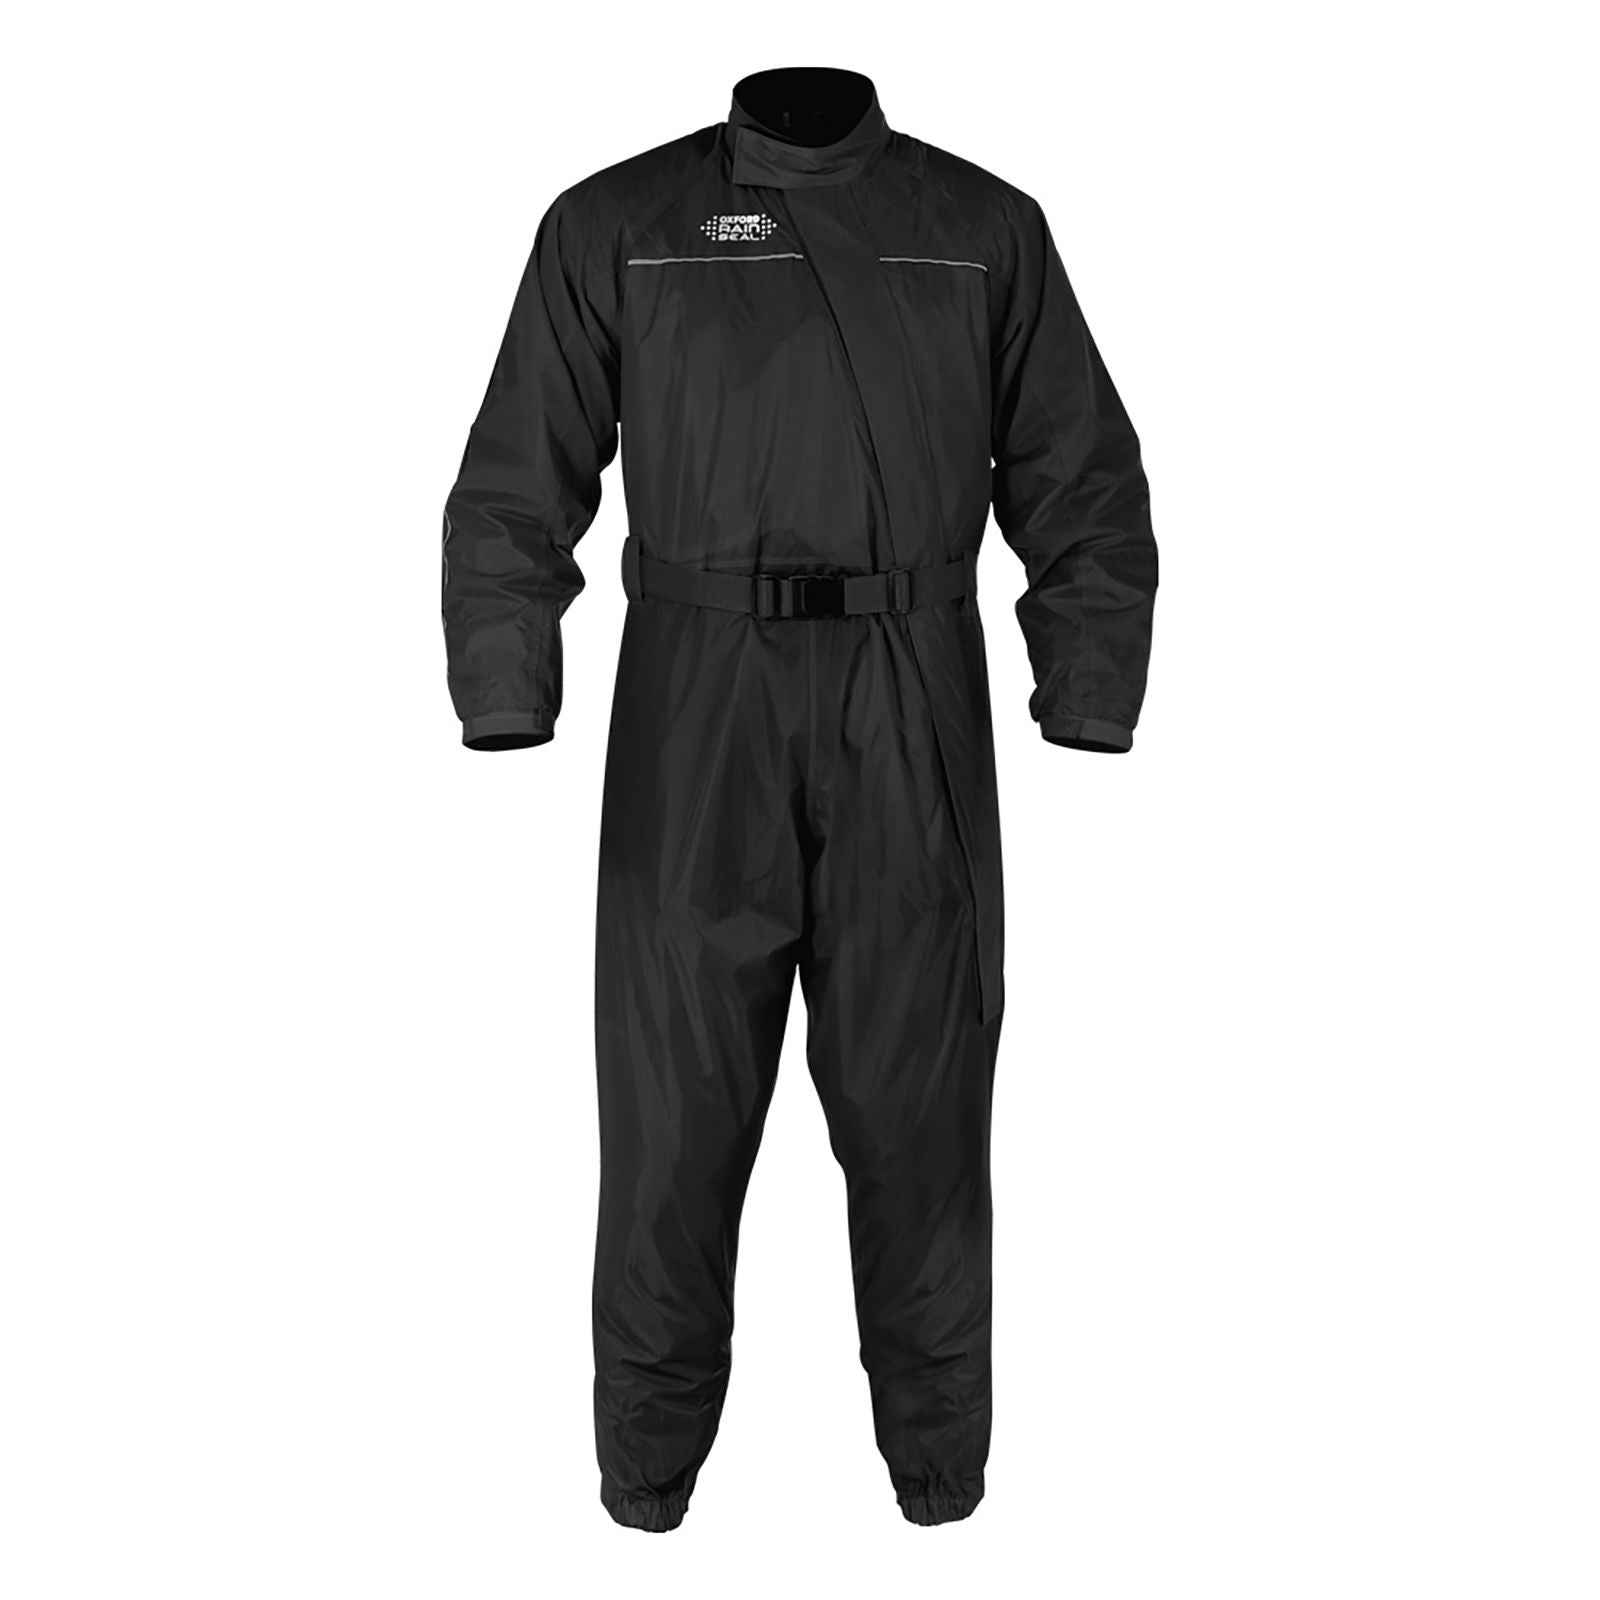 New OXFORD Rainseal Rain Suit - Black - 3XL #OXRM3003XL